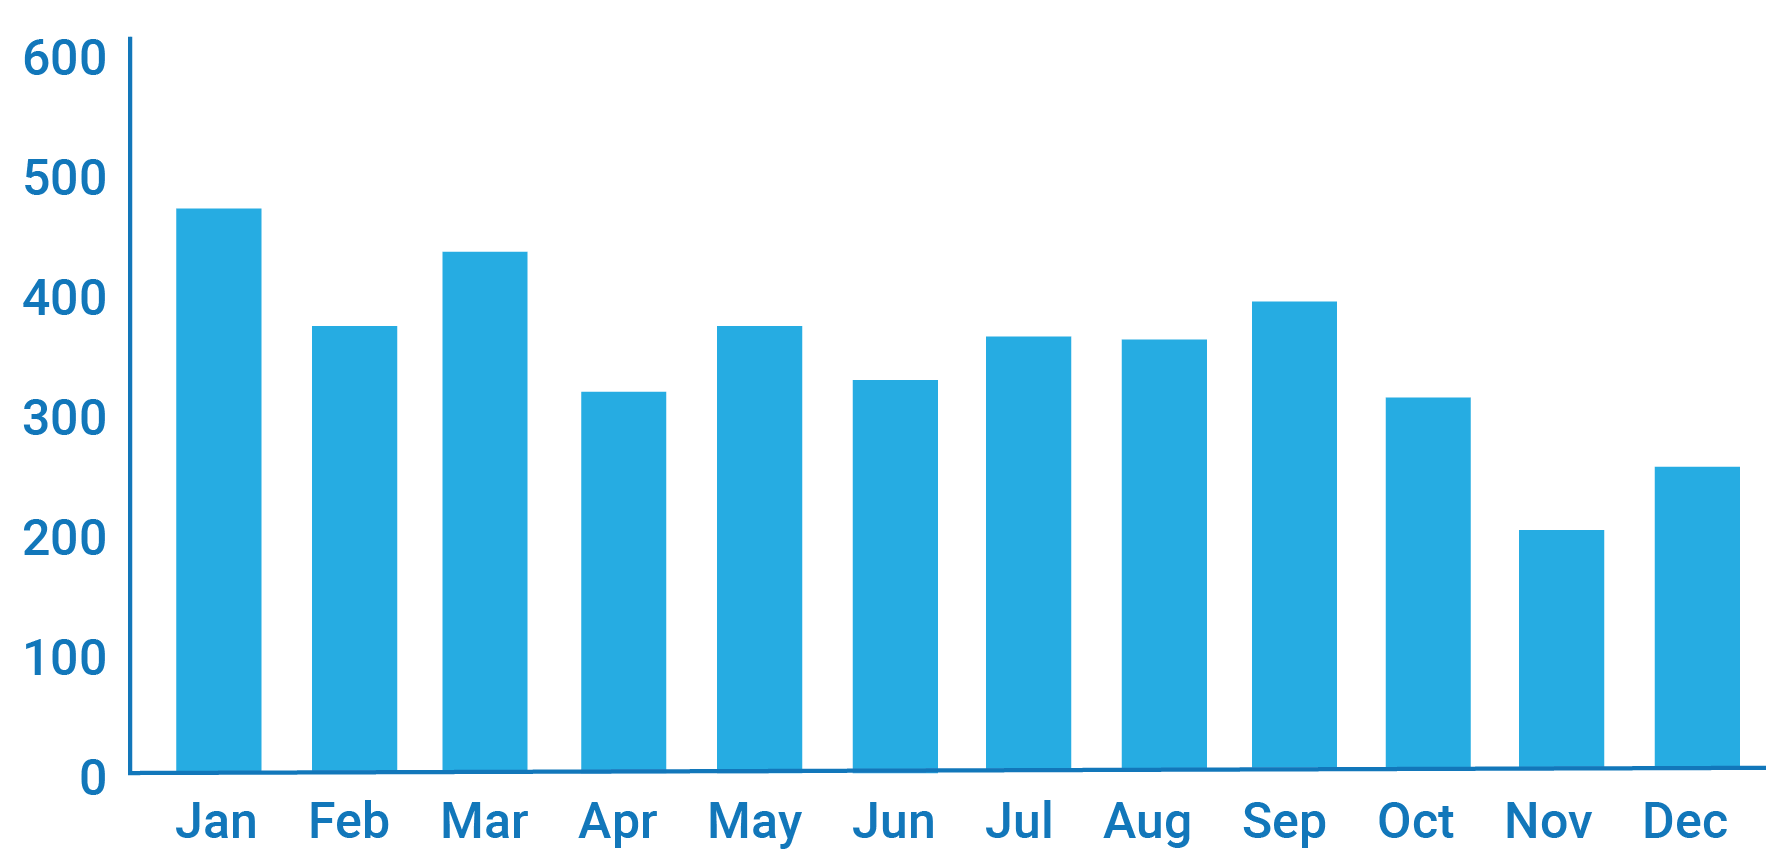 Community Posts per Month